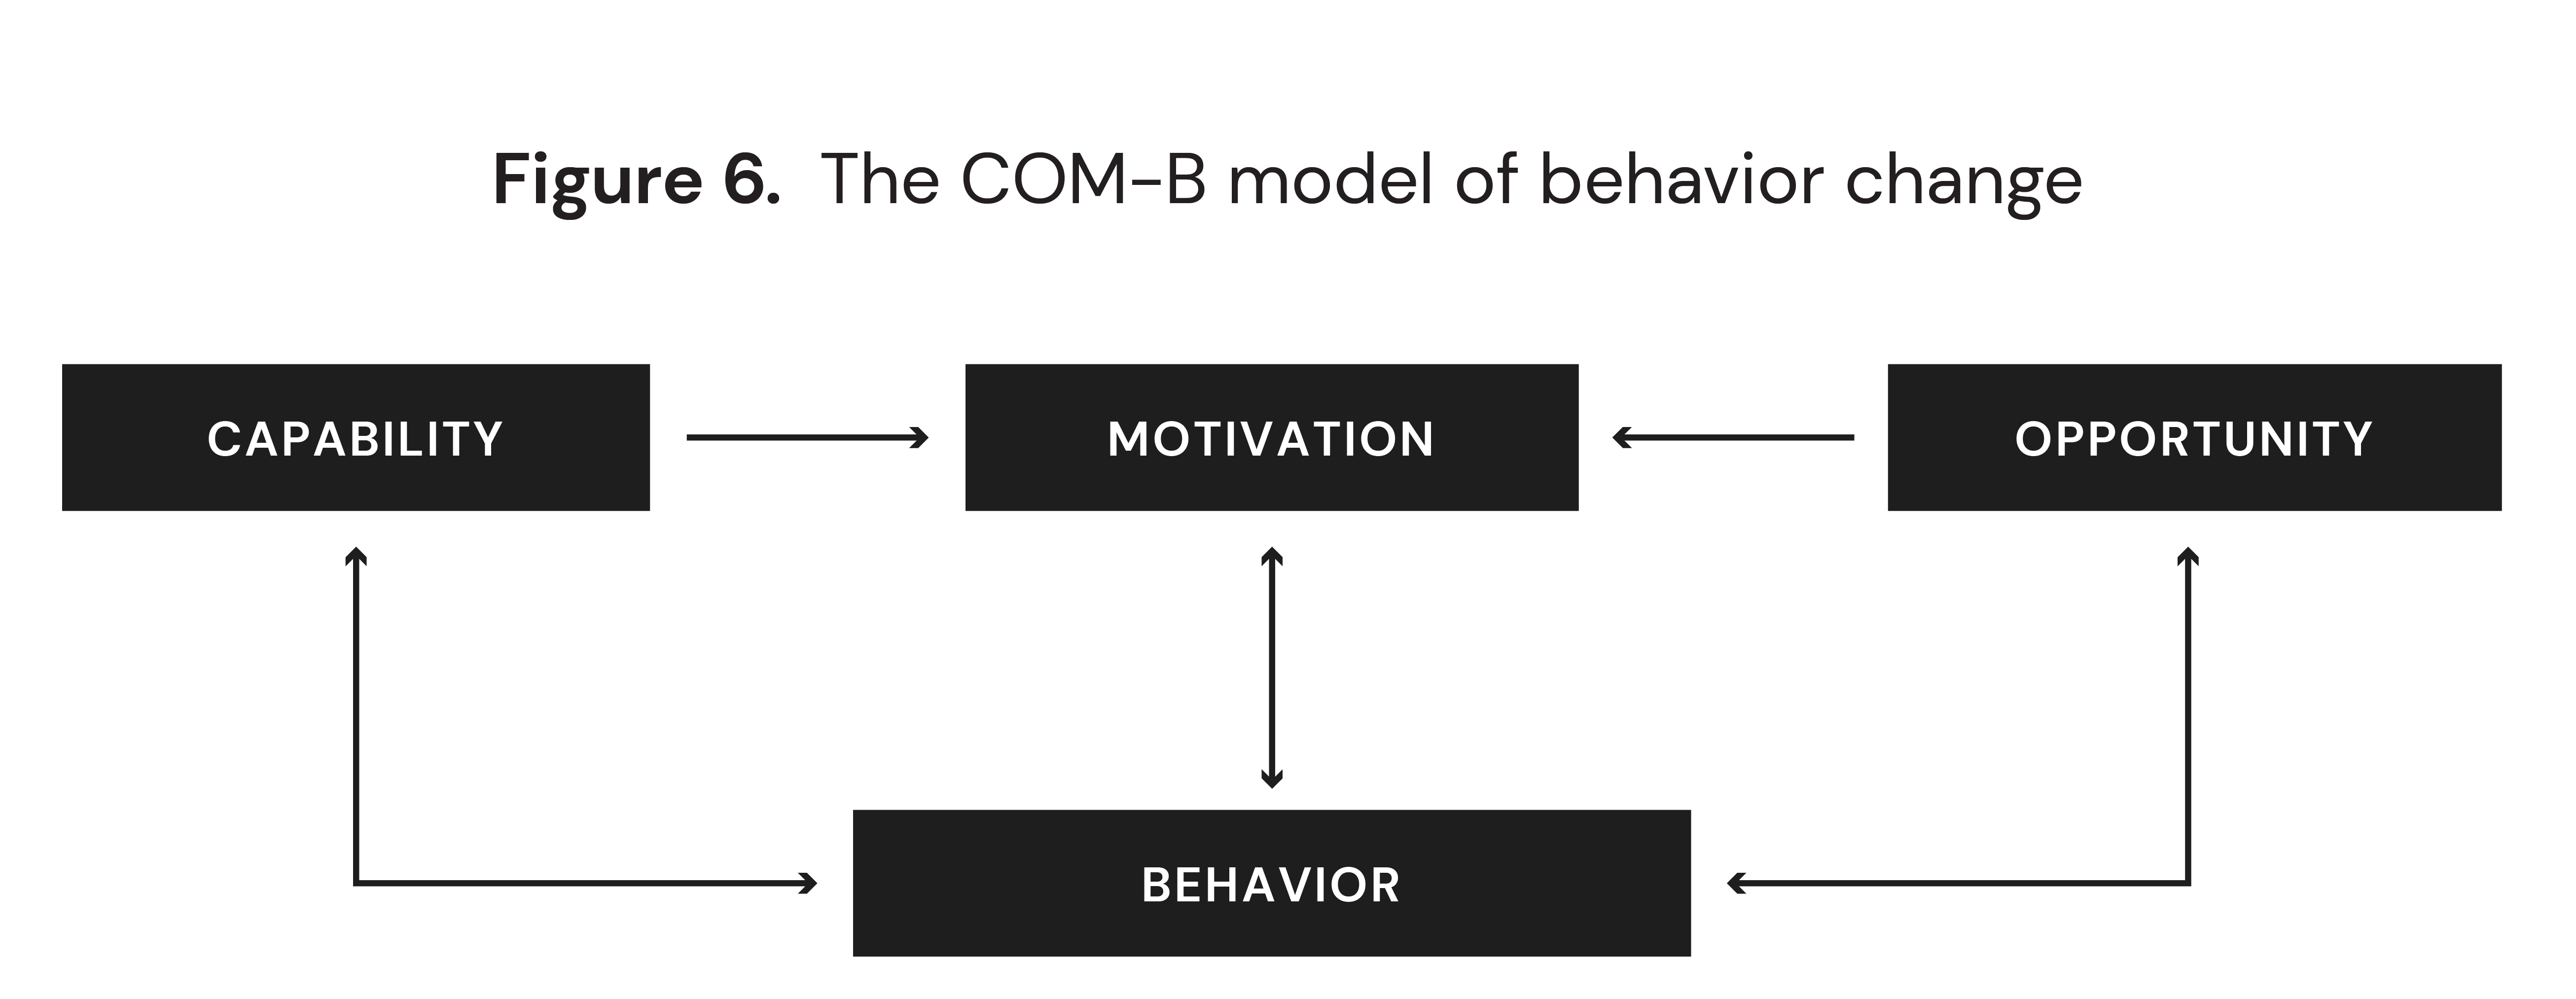 The COM-B model of behavior change